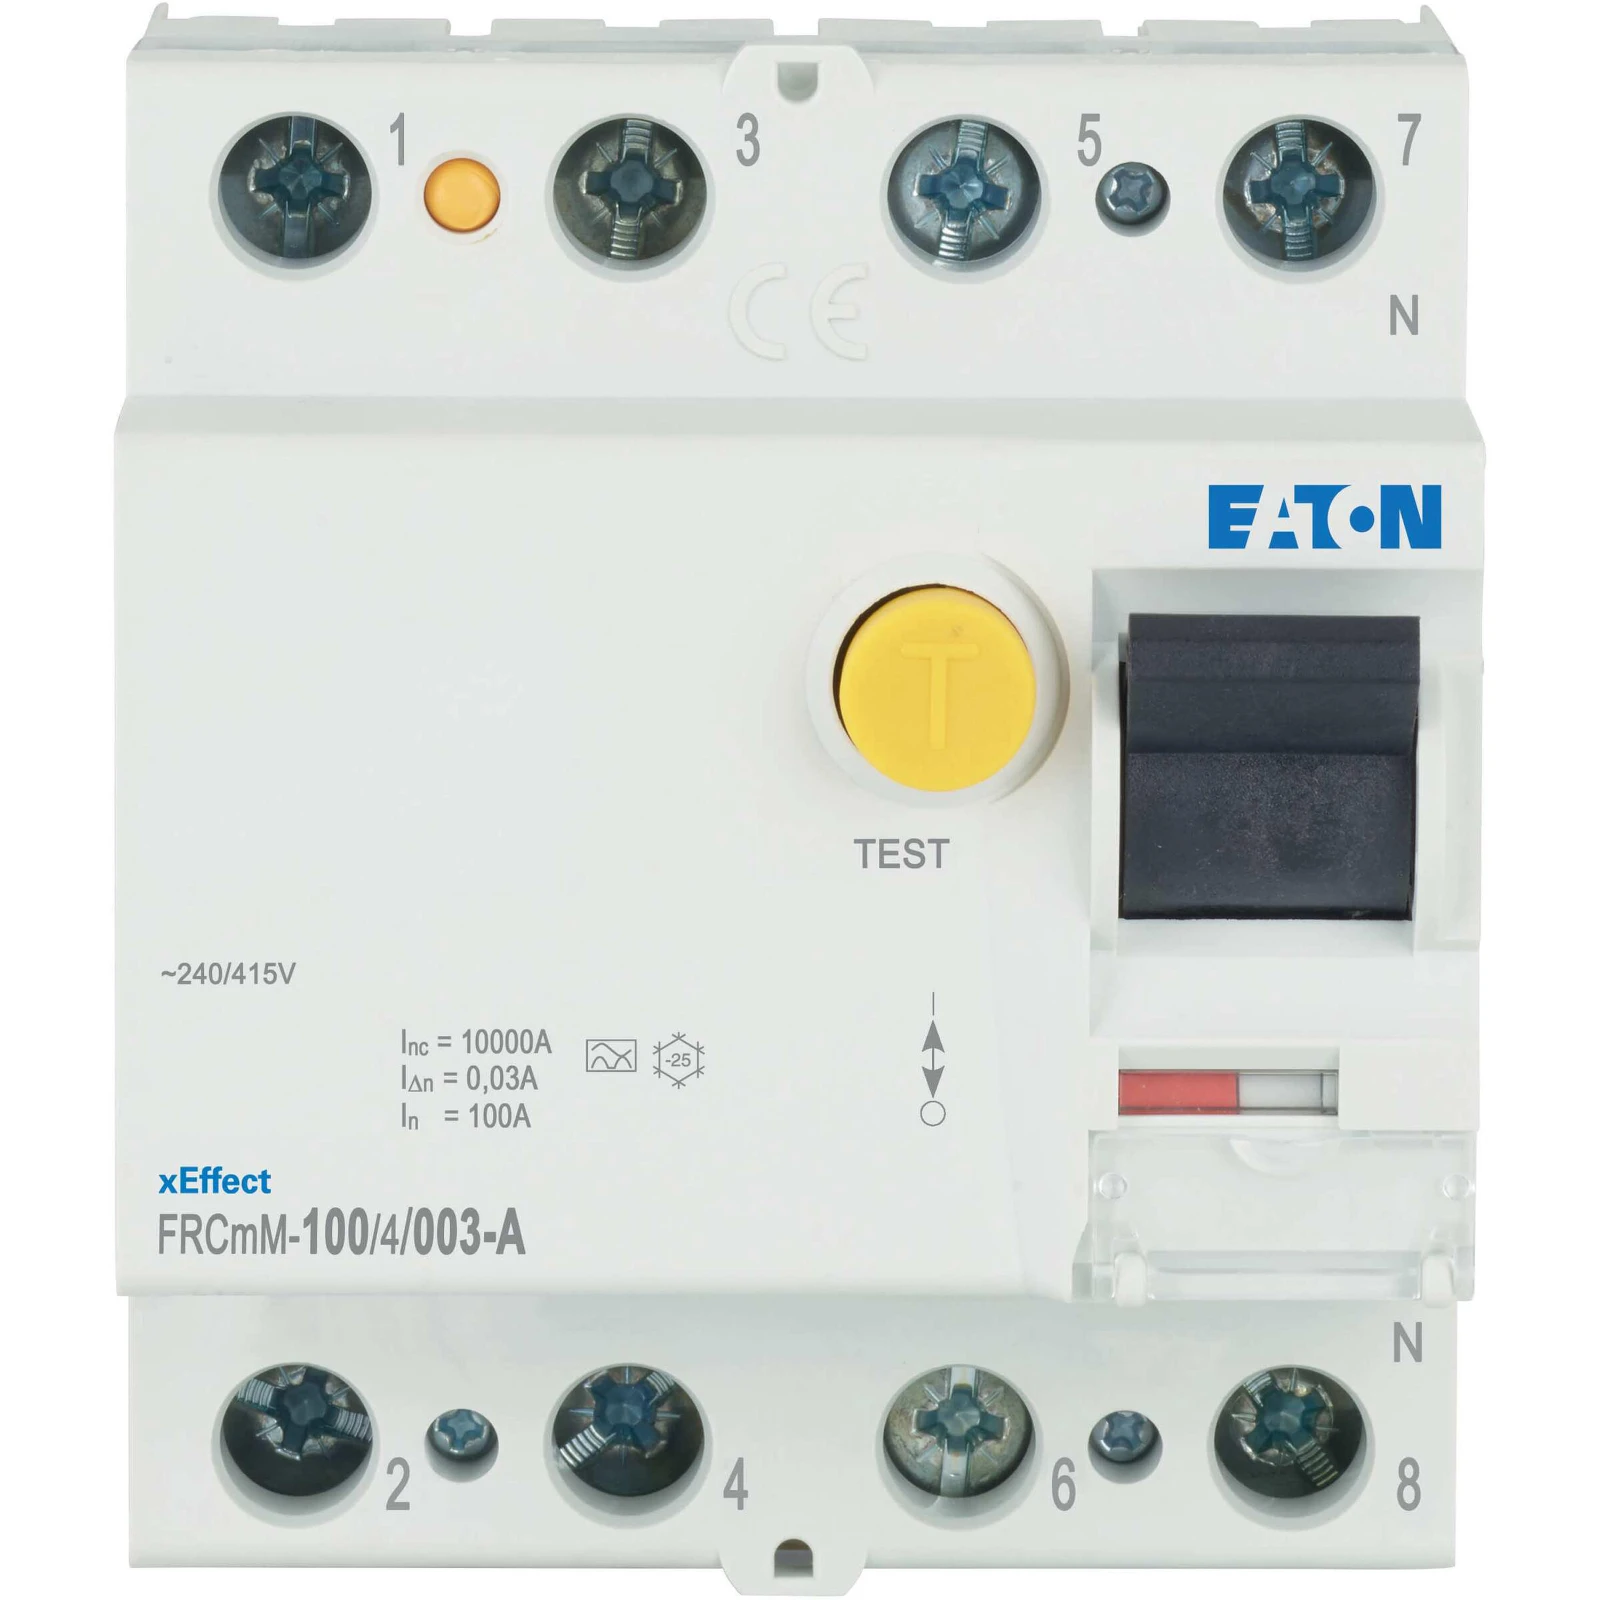 1172718 - Eaton FRCMM-100/4/003-A